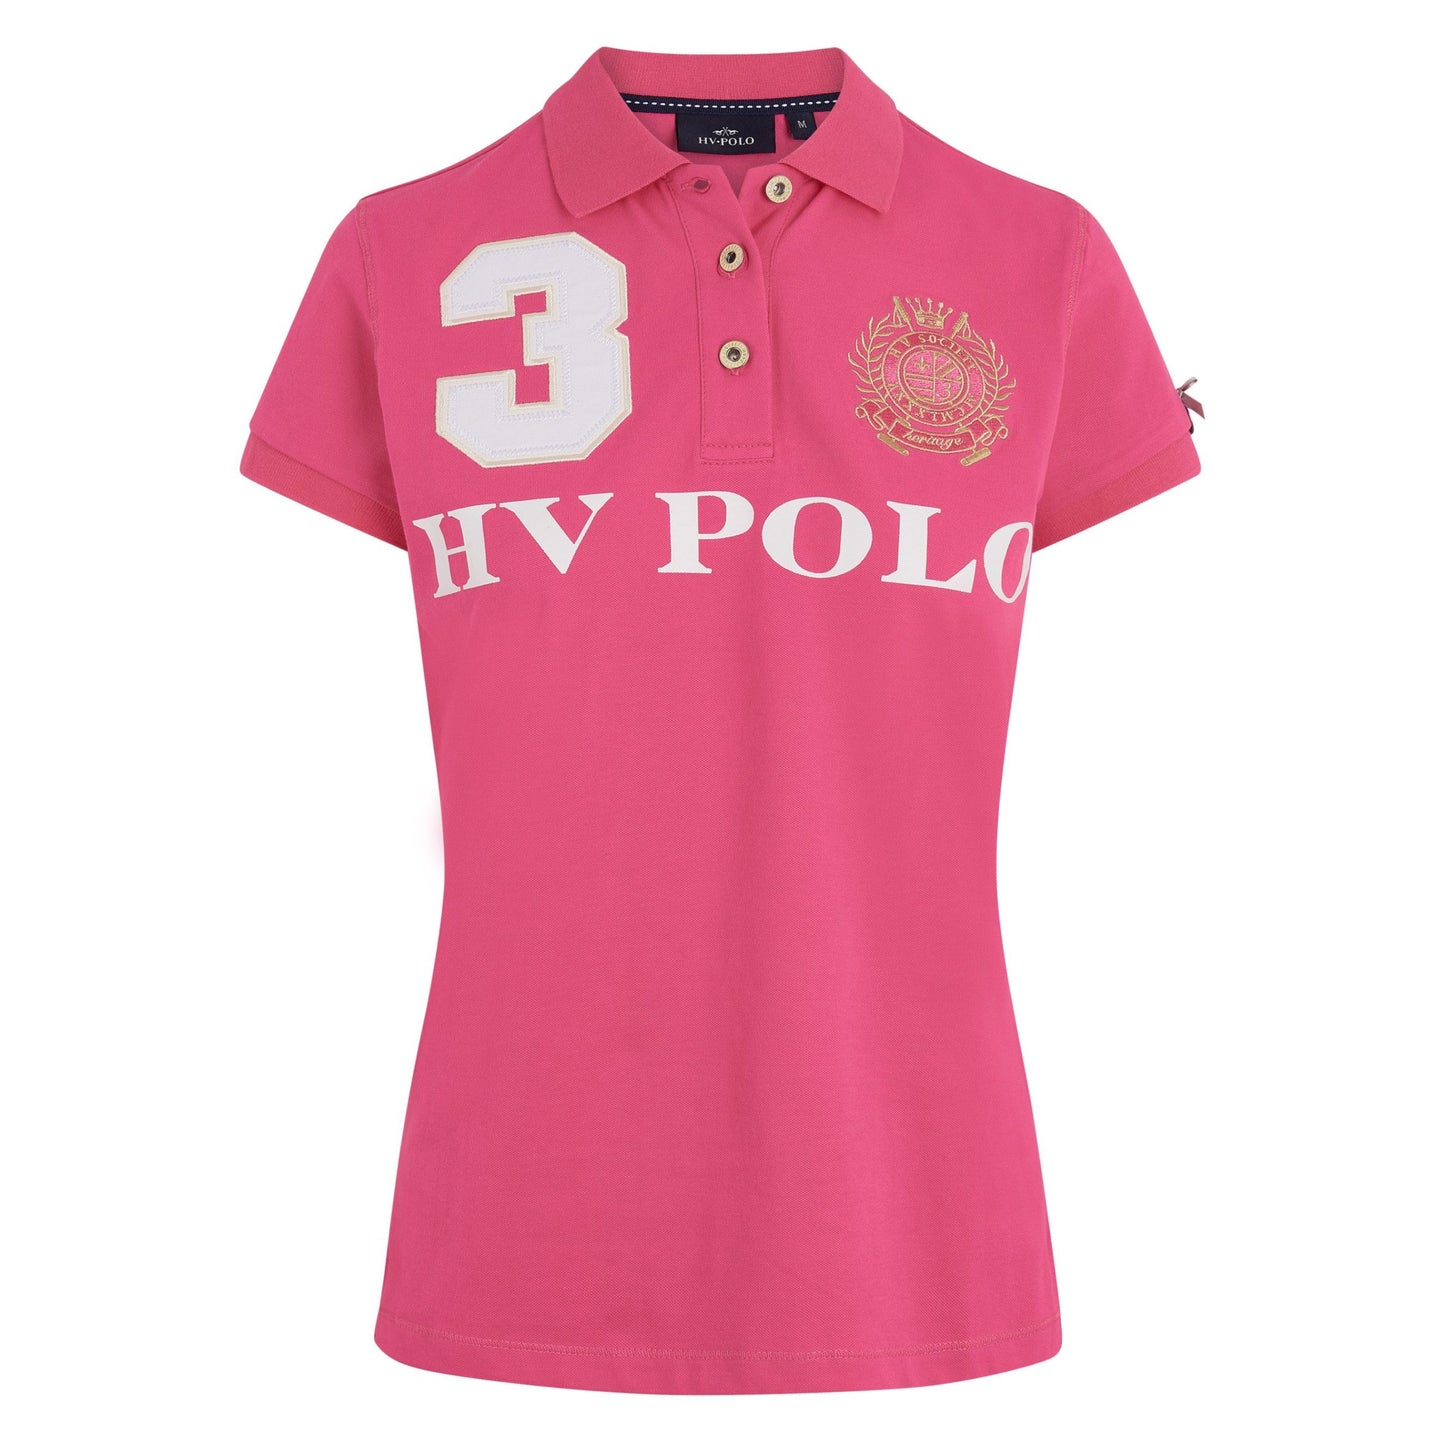 Hv Polo Childs Favouritas Short Sleeve Neon Fuchsia Polo Shirt